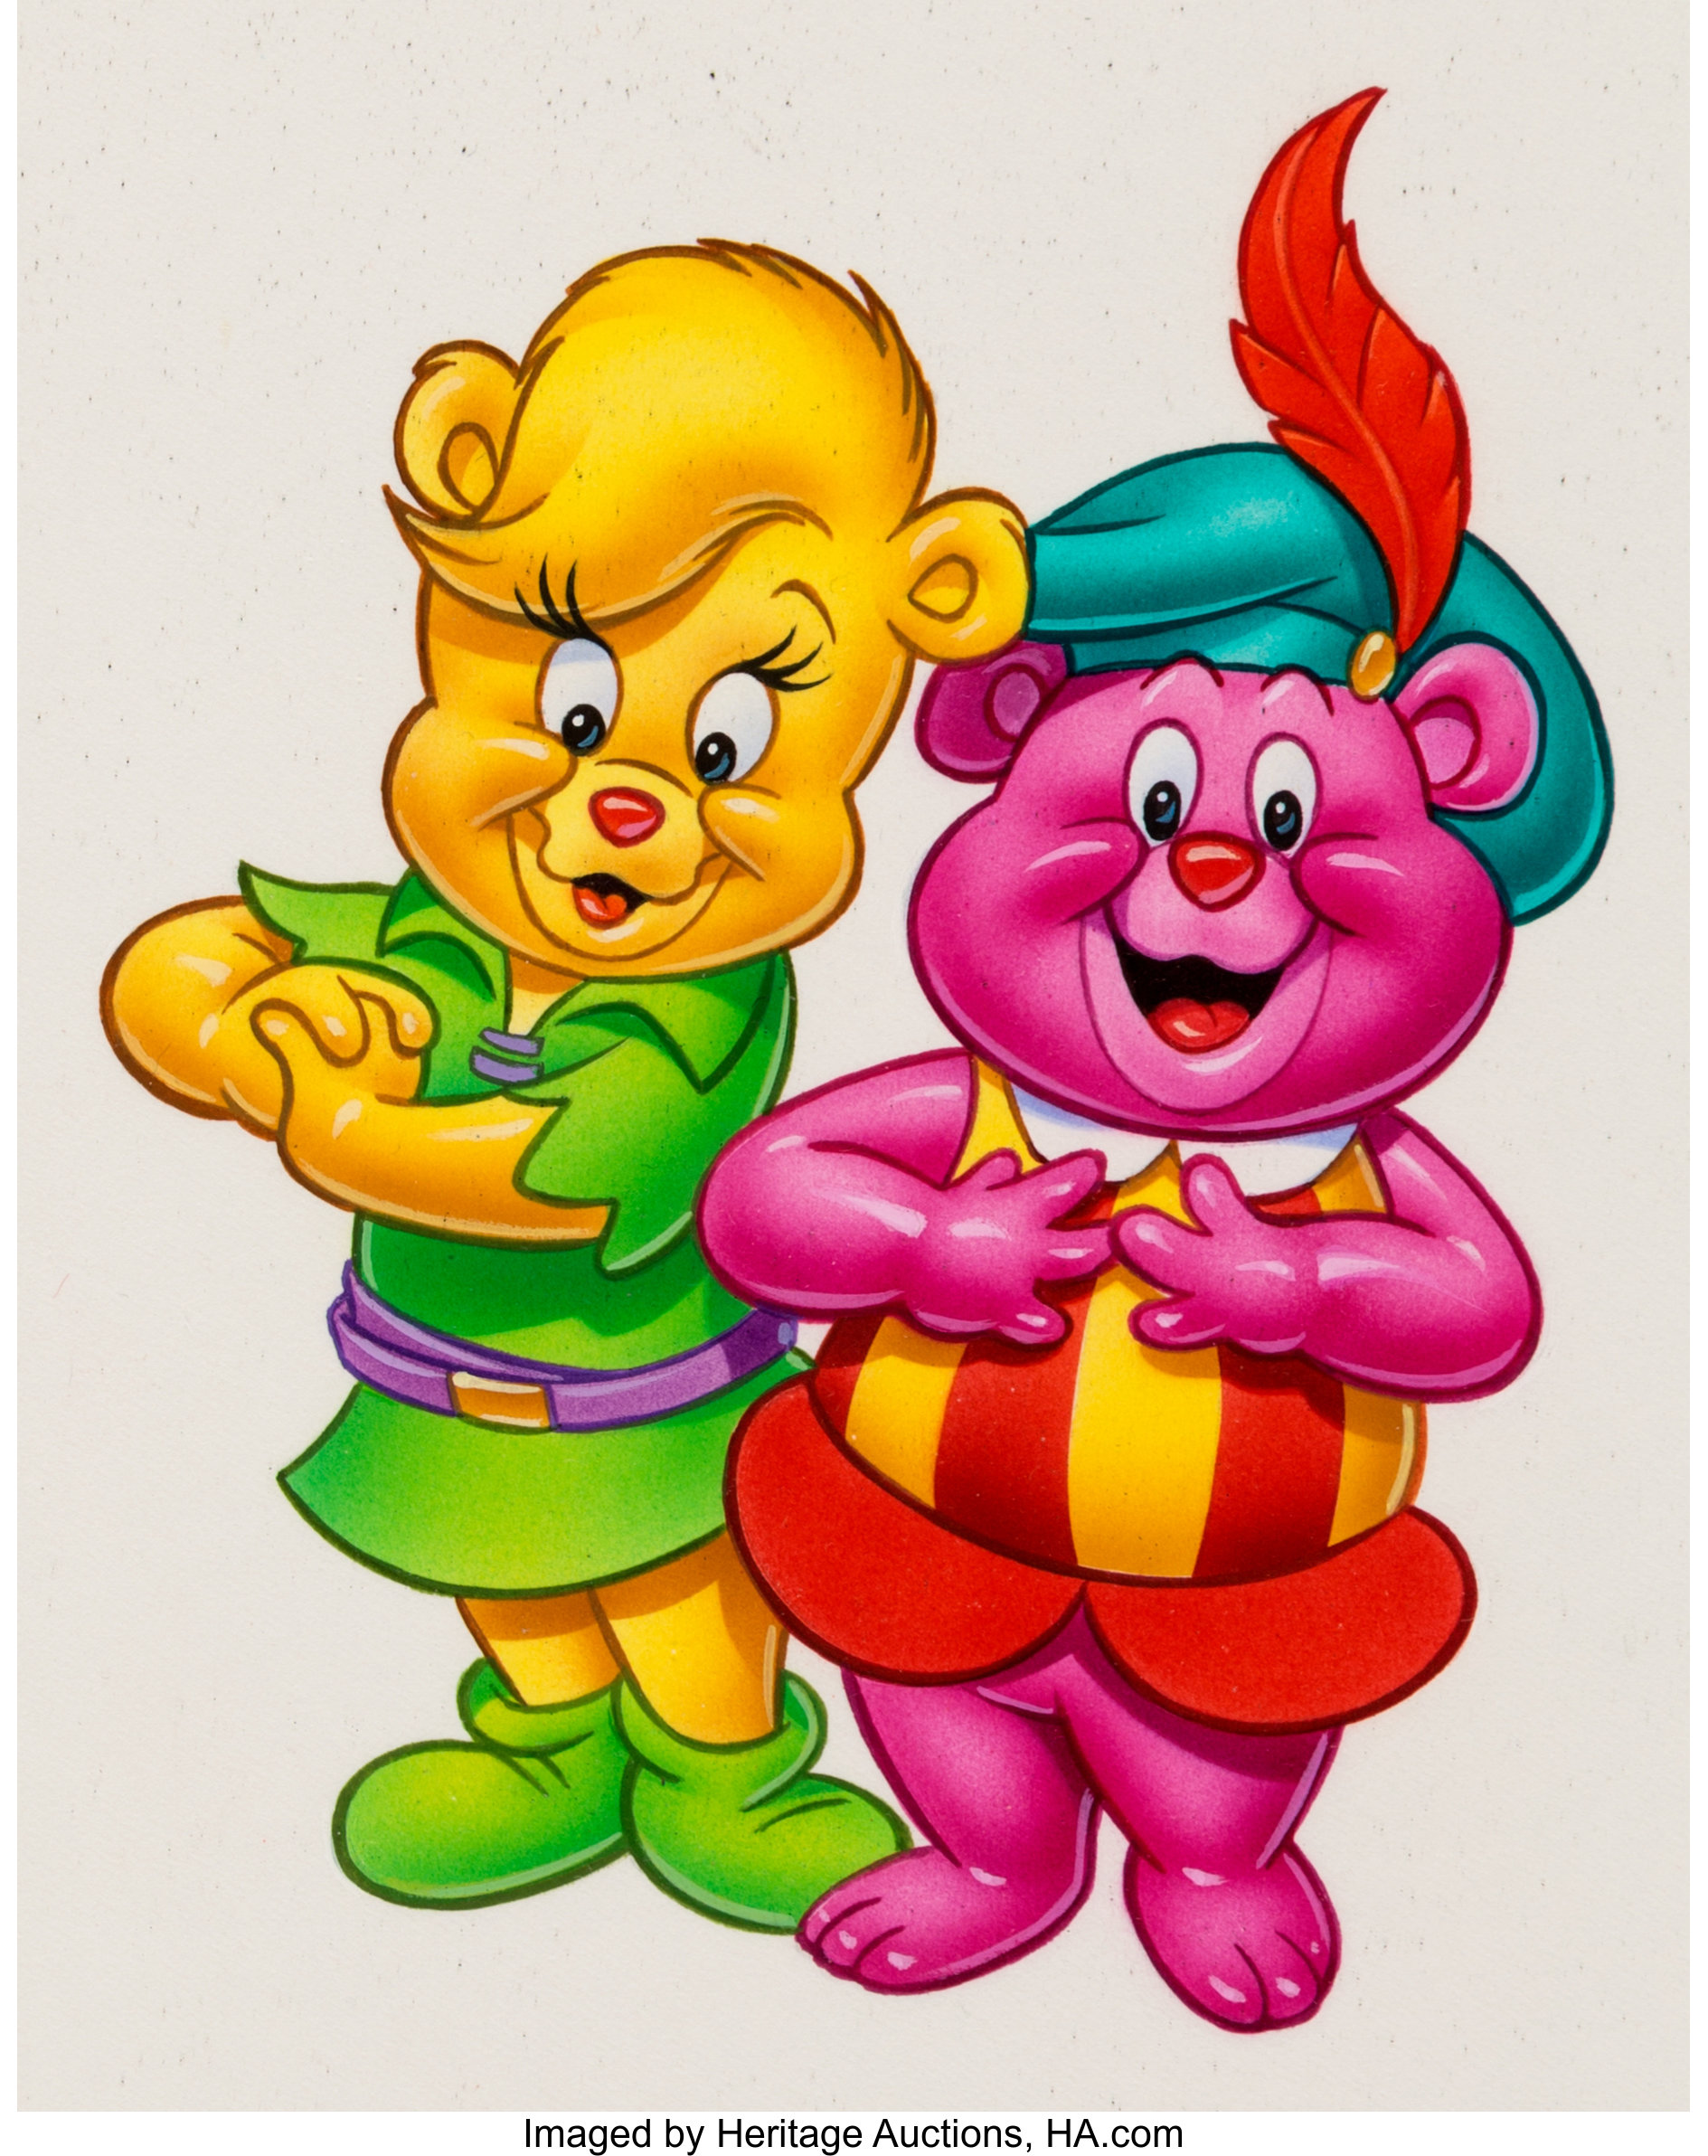 Bear cartoon images, Disney images, Gummy bears